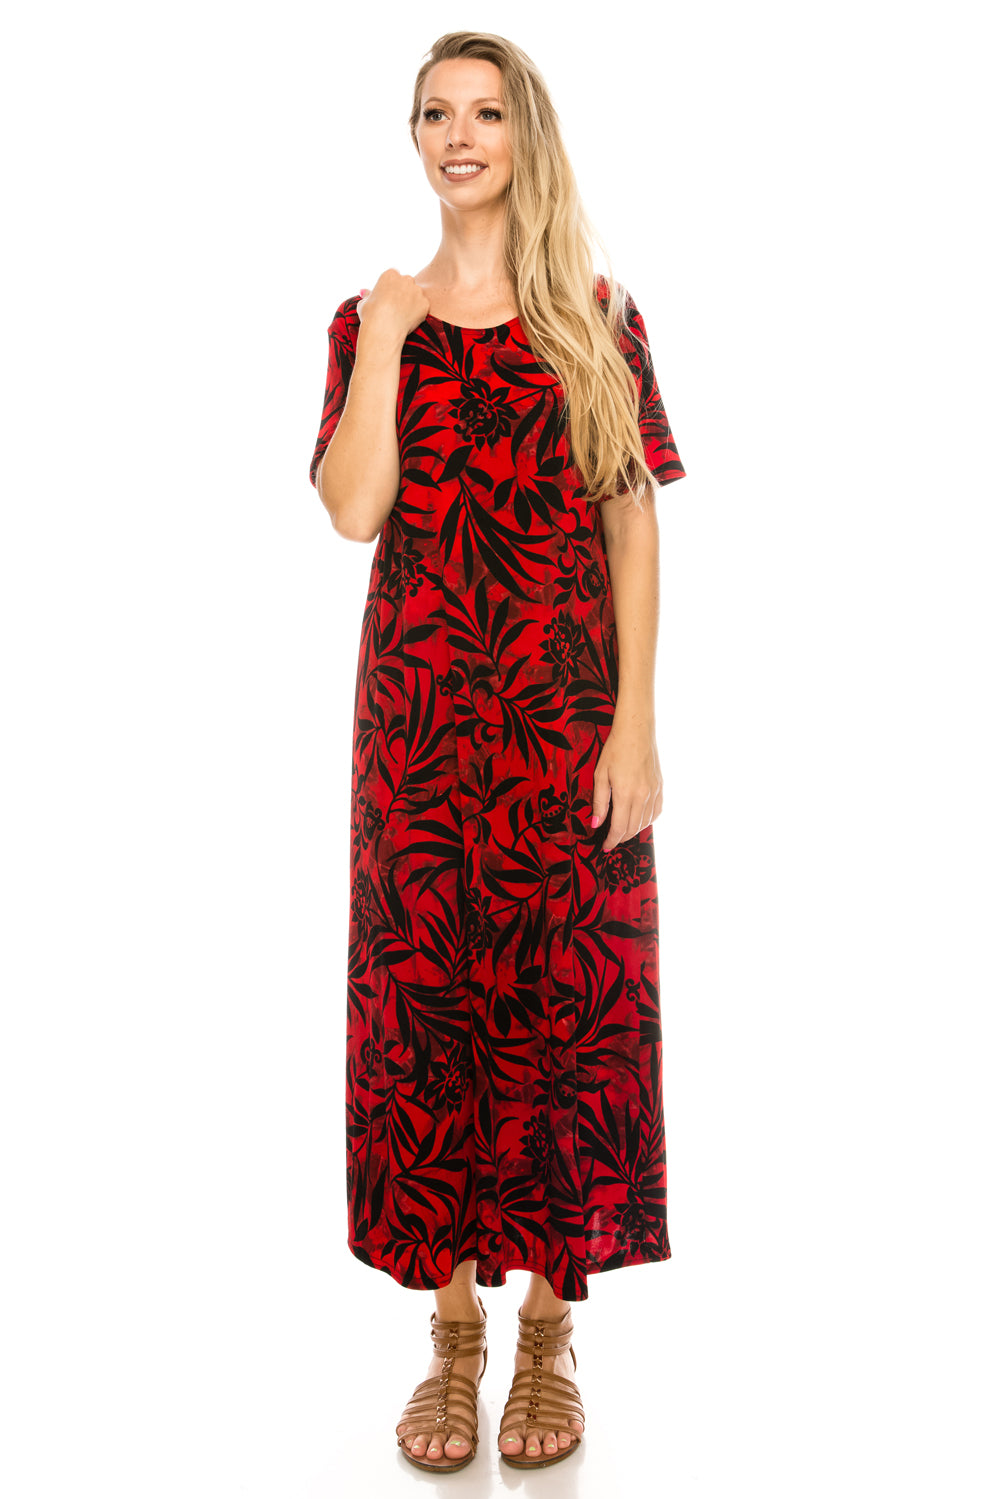 Jostar Women's Stretchy Long Dress Short Sleeve Print, 702BN-SP-W173 - Jostar Online